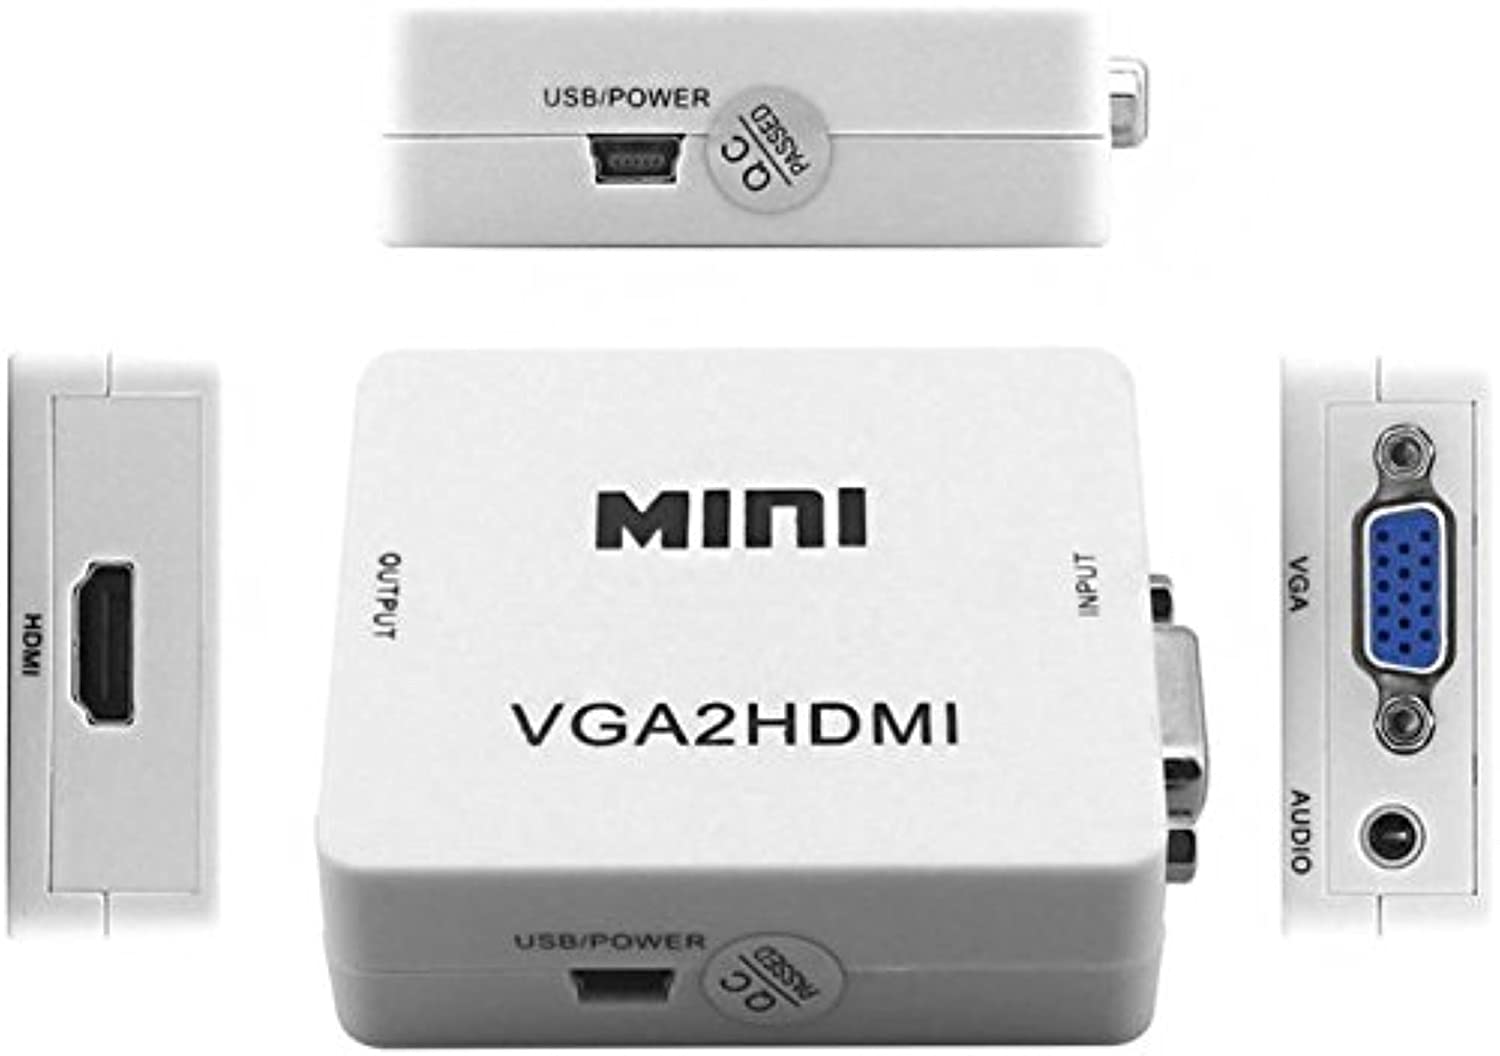 vga to hdmi converter for tv, hdmi to vga cable 2 meter, hdmi to vga converter box vga to hdmi female converter, how to make a vga to hdmi cable,  hdmi to vga converter with audio, mini vga to hdmi converter, hd to vga cable,  PremiumAV MST-722-7_DR transportable immoderate HD VGA to HDMI convertor, PremiumAV MST-722-7_DR transportable immoderate HD VGA to HDMI convertor price, PremiumAV MST-722-7_DR transportable immoderate HD VGA to HDMI convertor price in india, PremiumAV MST-722-7_DR transportable immoderate HD VGA to HDMI convertor online, PremiumAV MST-722-7_DR transportable immoderate HD VGA to HDMI convertor features, PremiumAV MST-722-7_DR transportable immoderate HD VGA to HDMI convertor specification, 